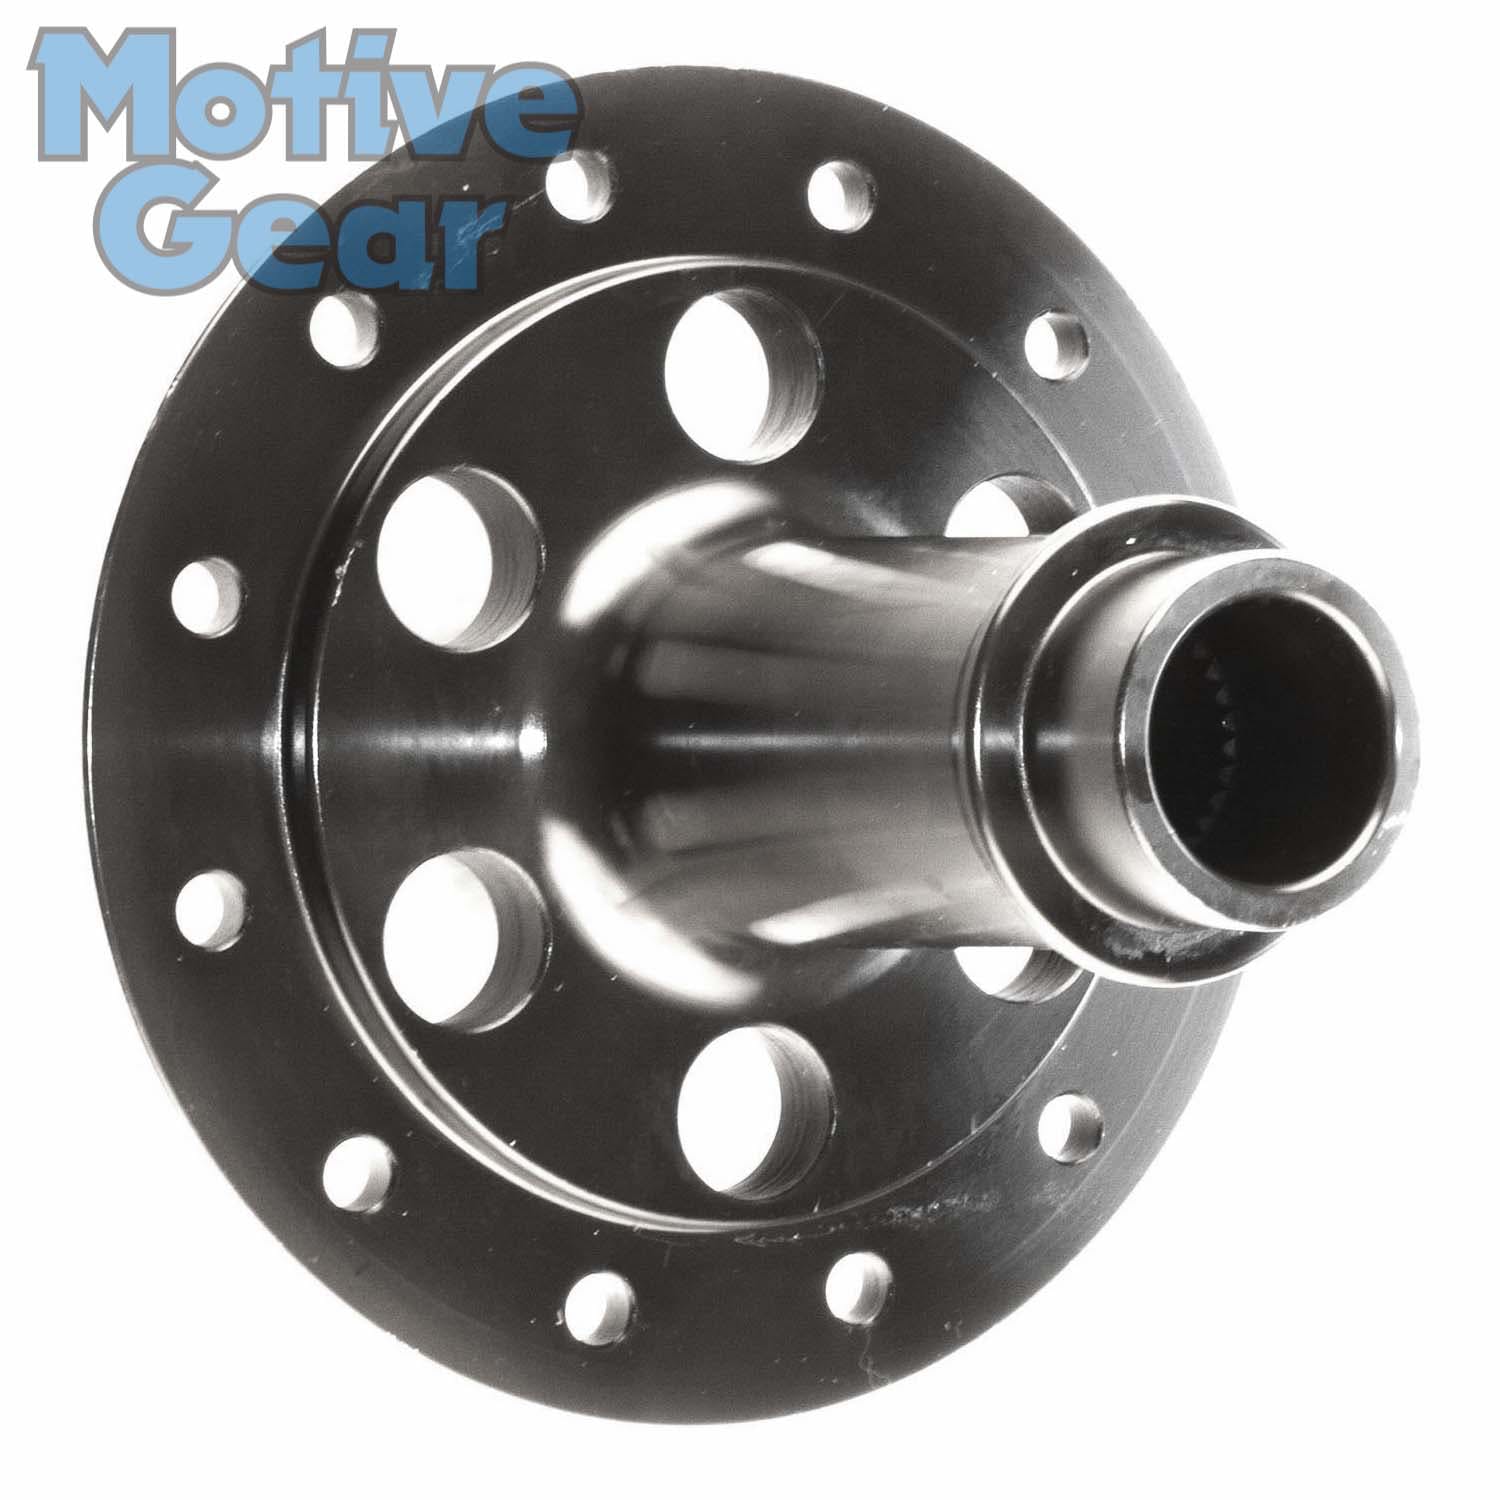 Motive Gear FS12-30 Differential Full Spool